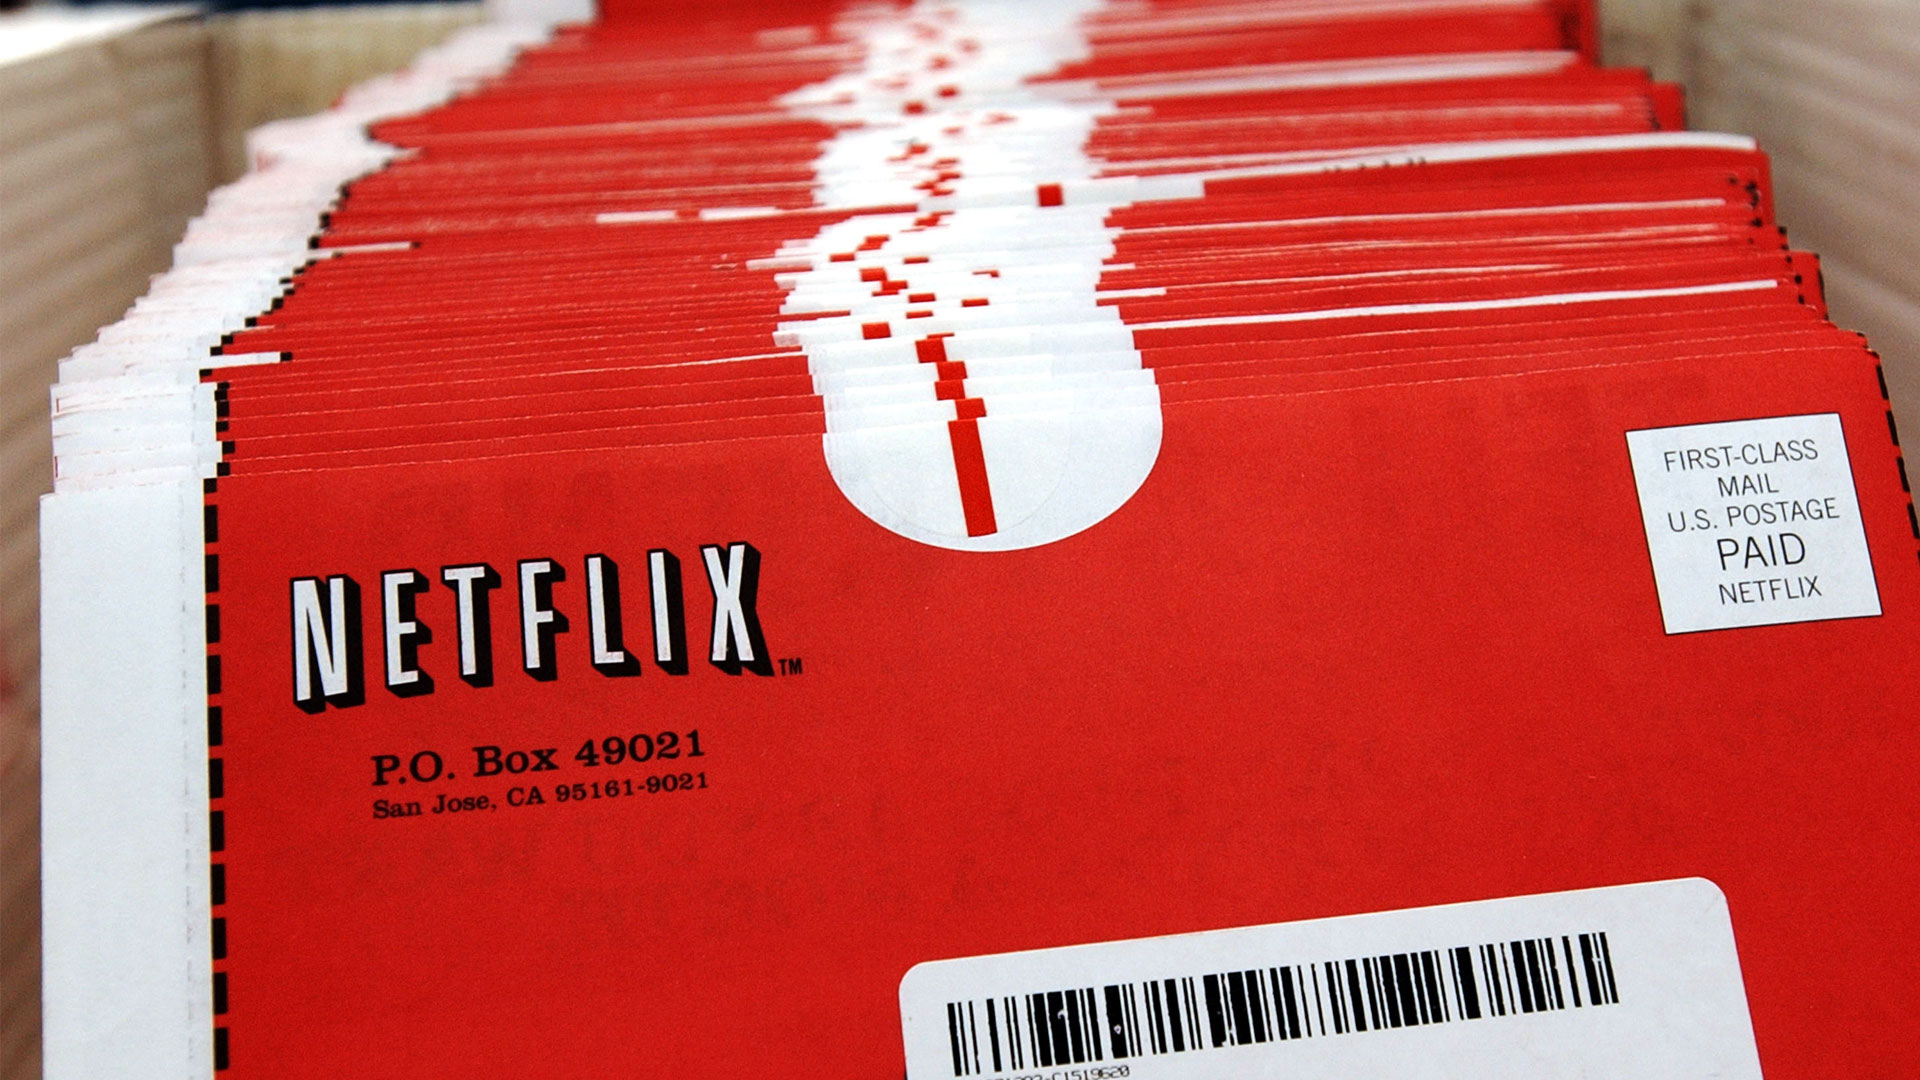 A screenshot of multiple red Netflix DVD envelopes stacked together